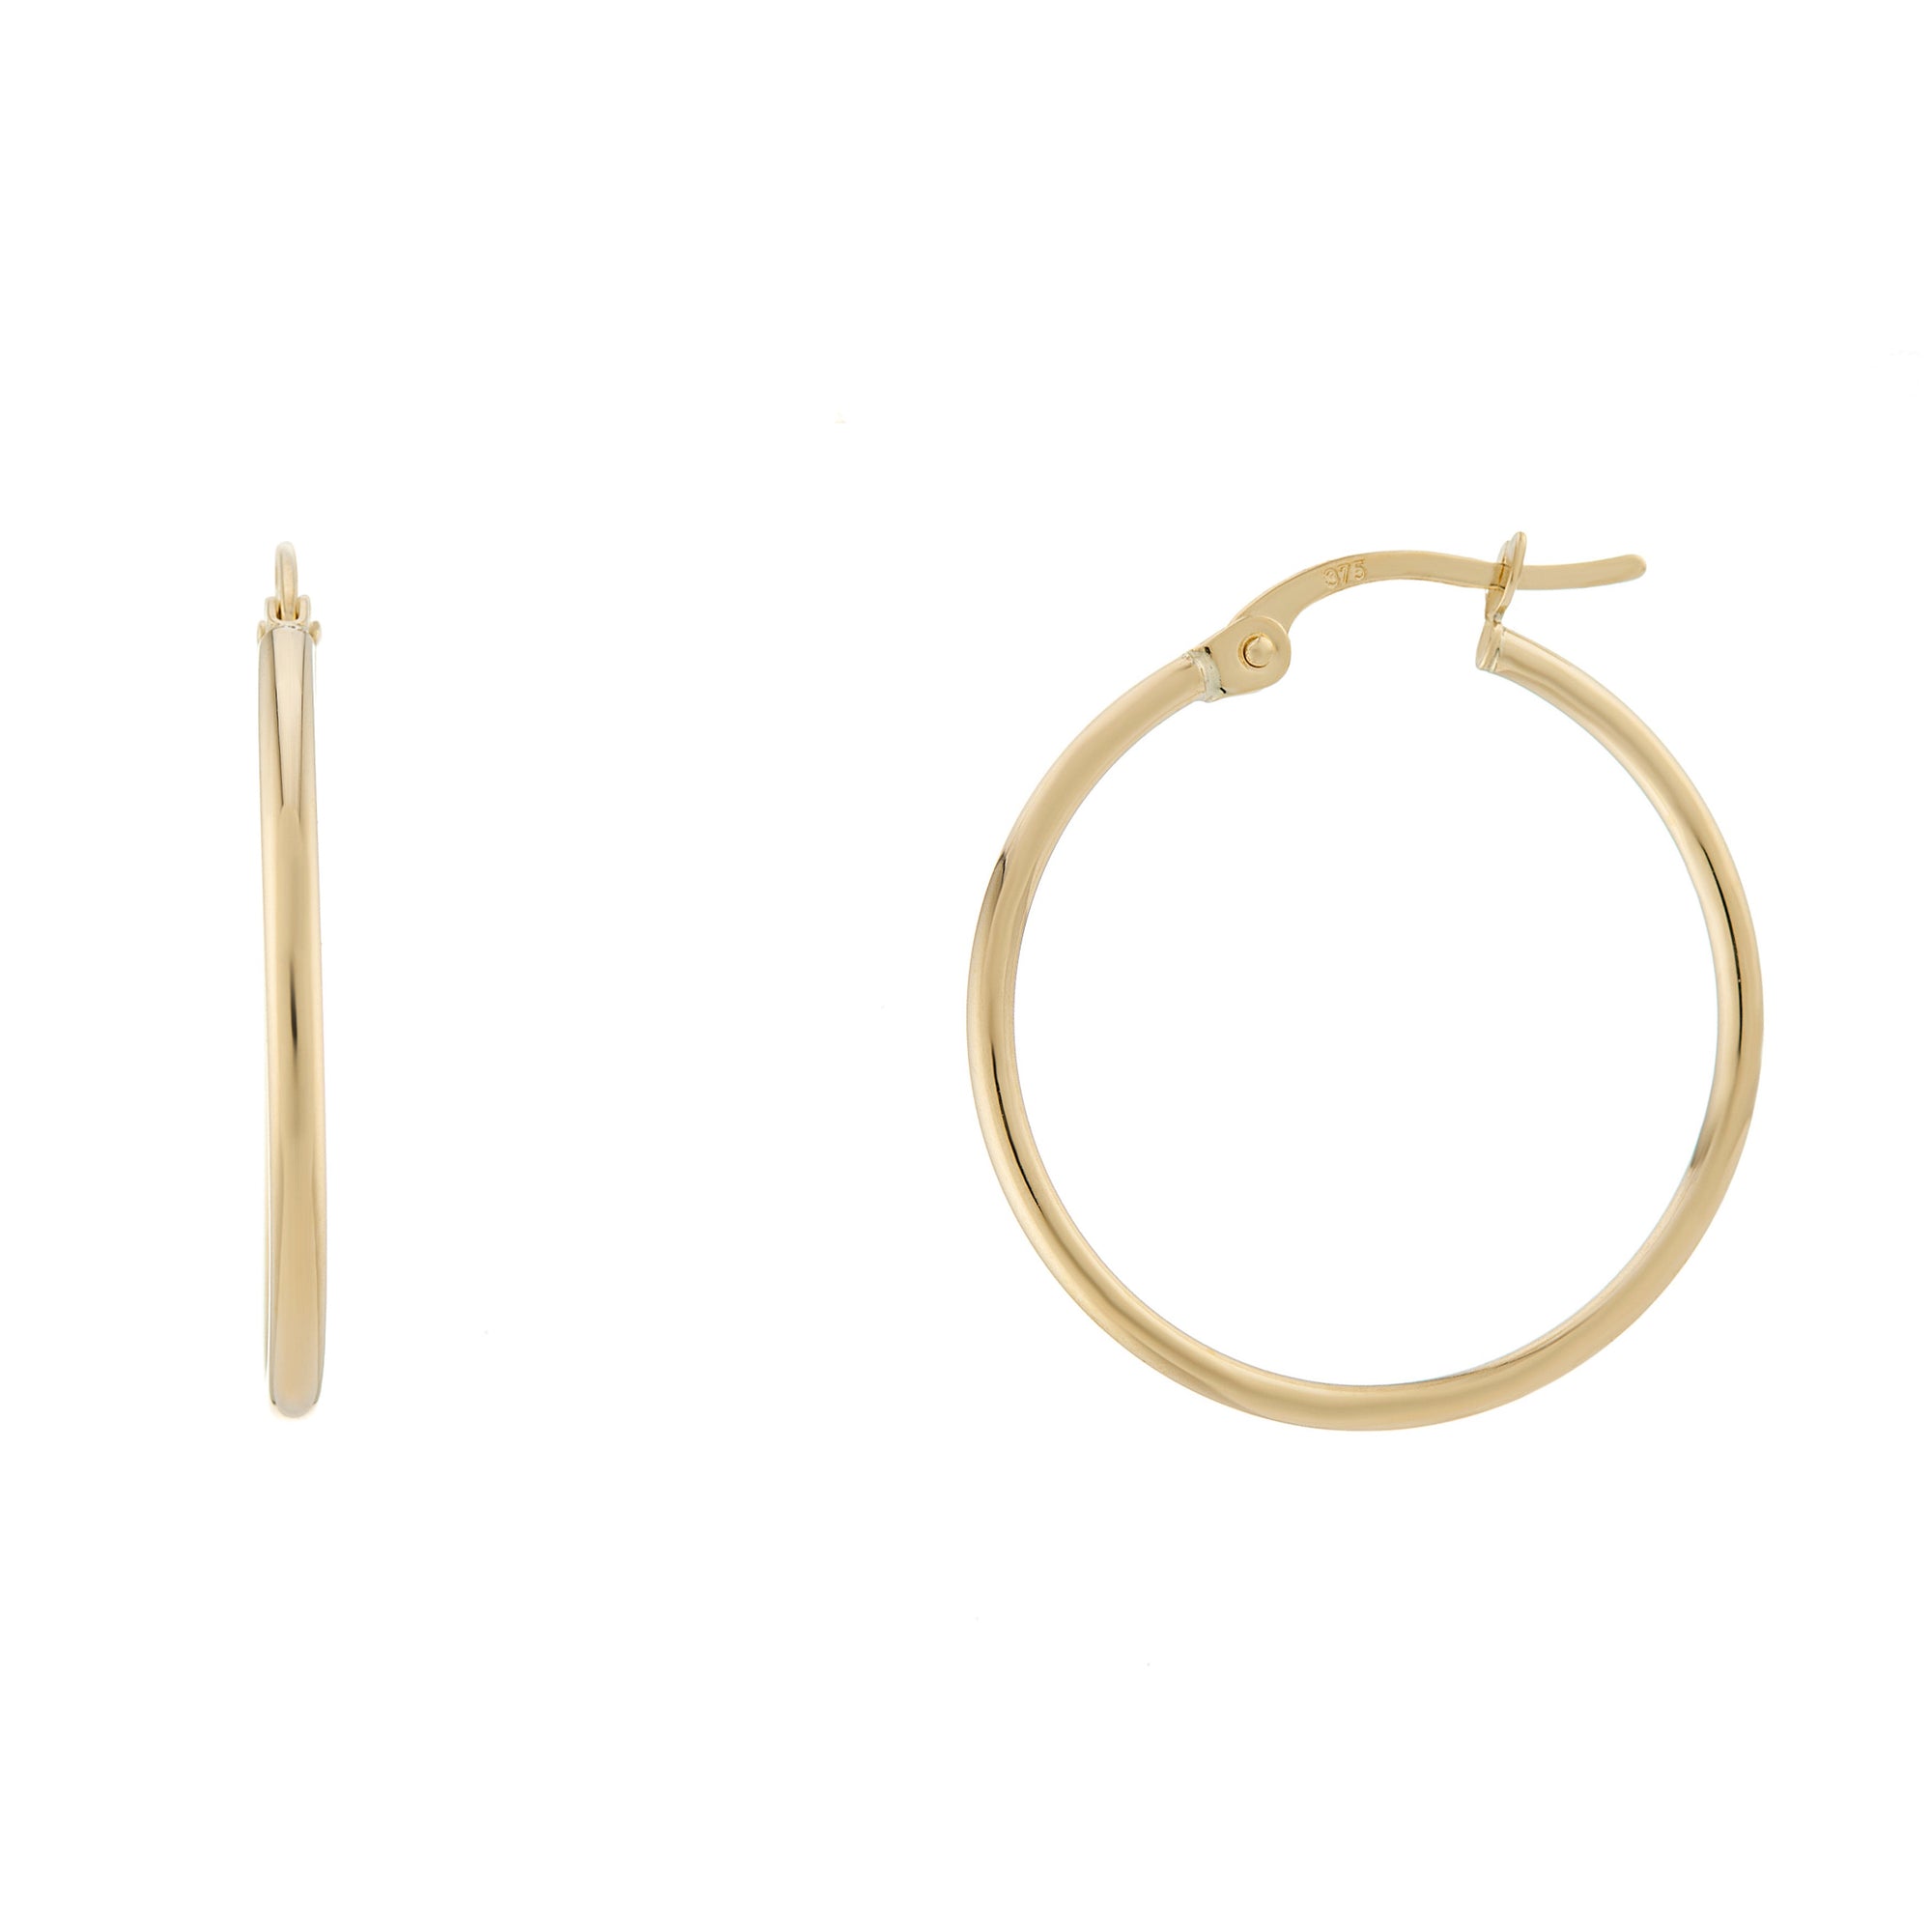 9ct gold 1.5mm x 20mm plain hoop earrings